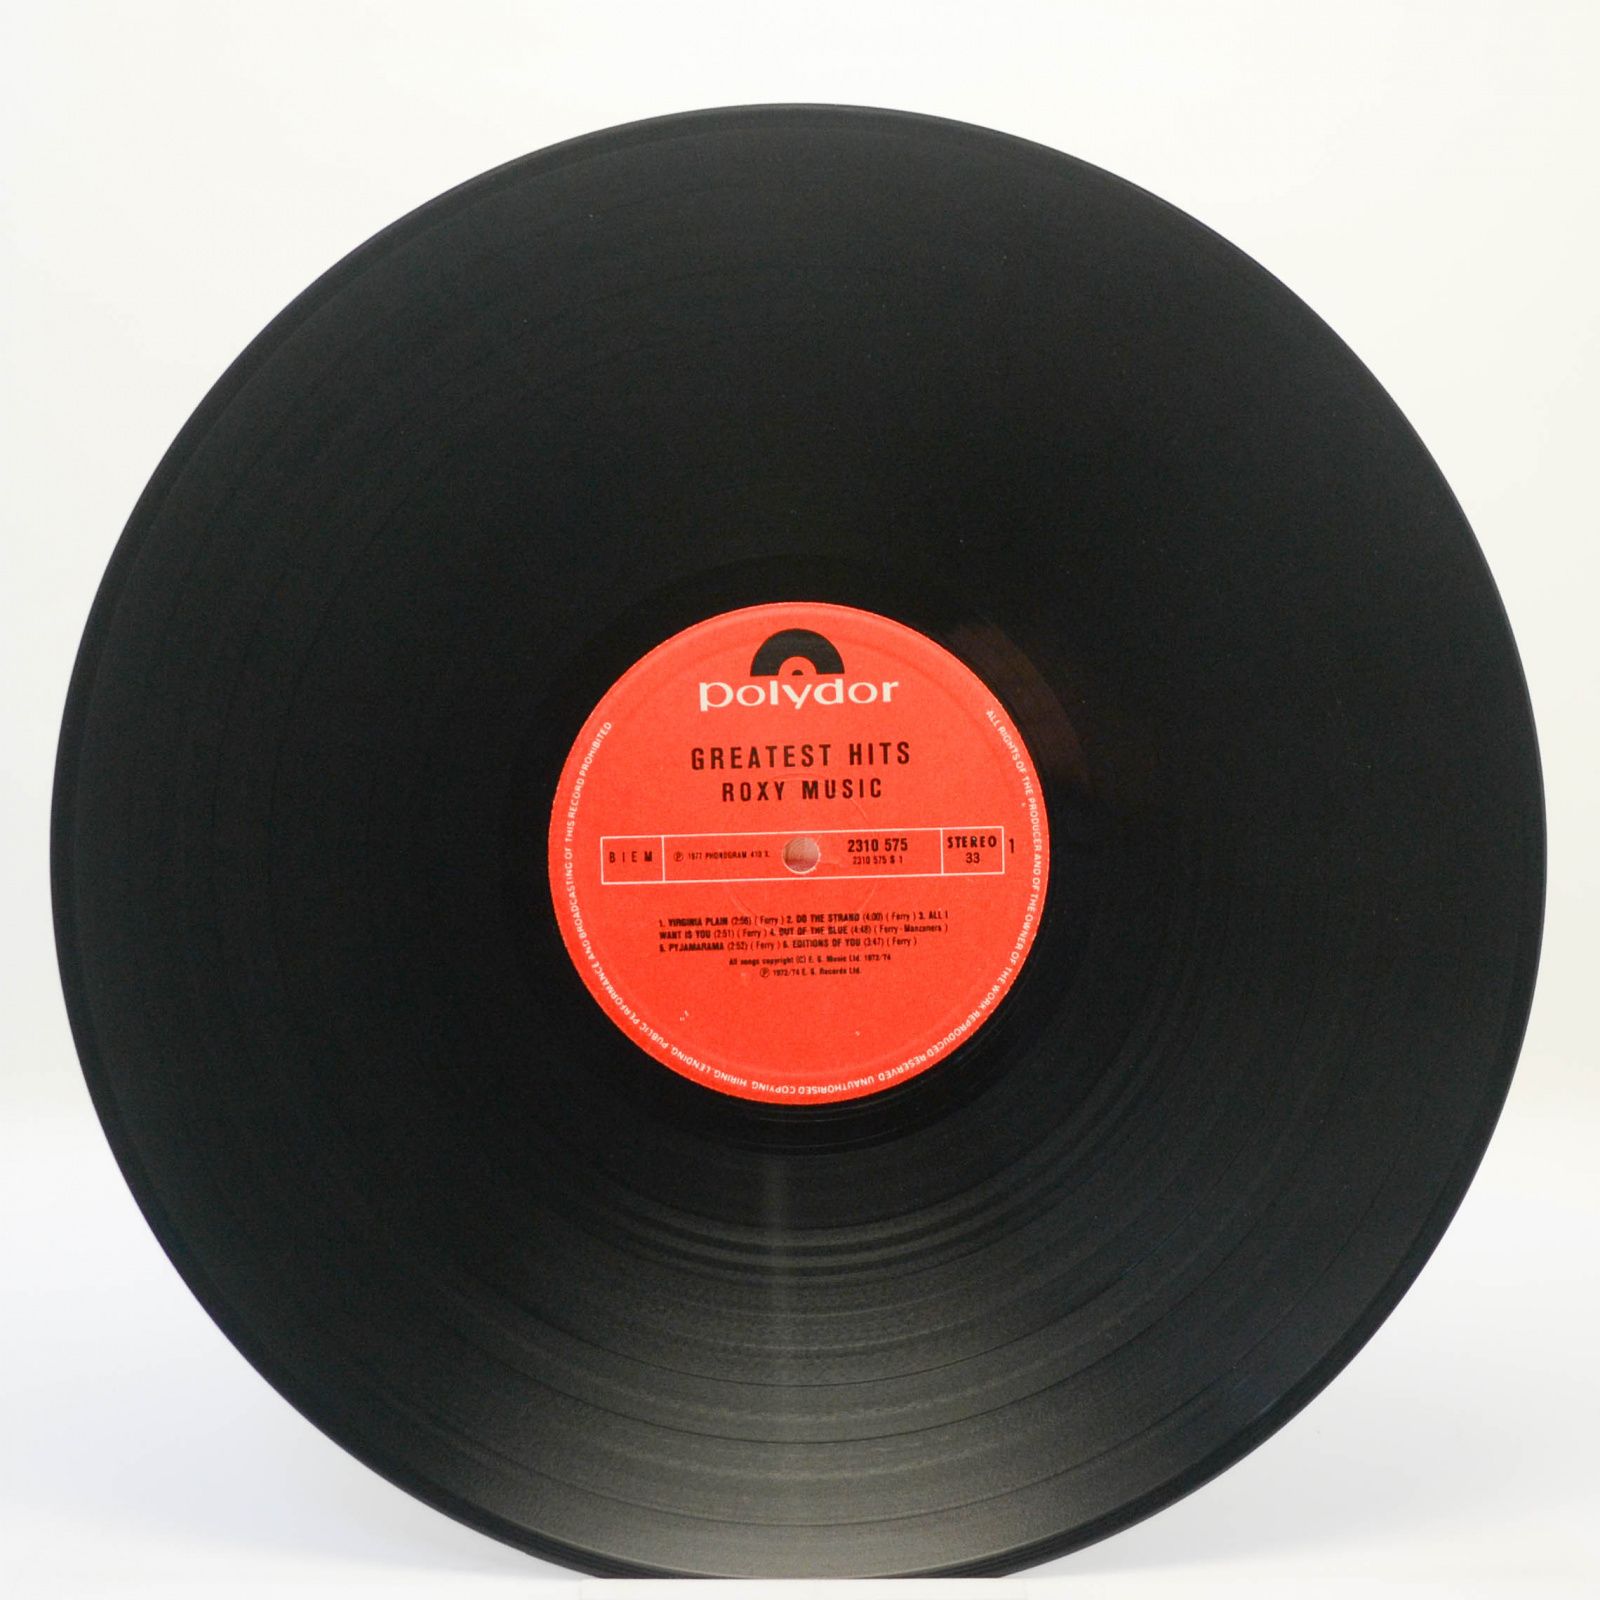 Roxy Music — Greatest Hits, 1977